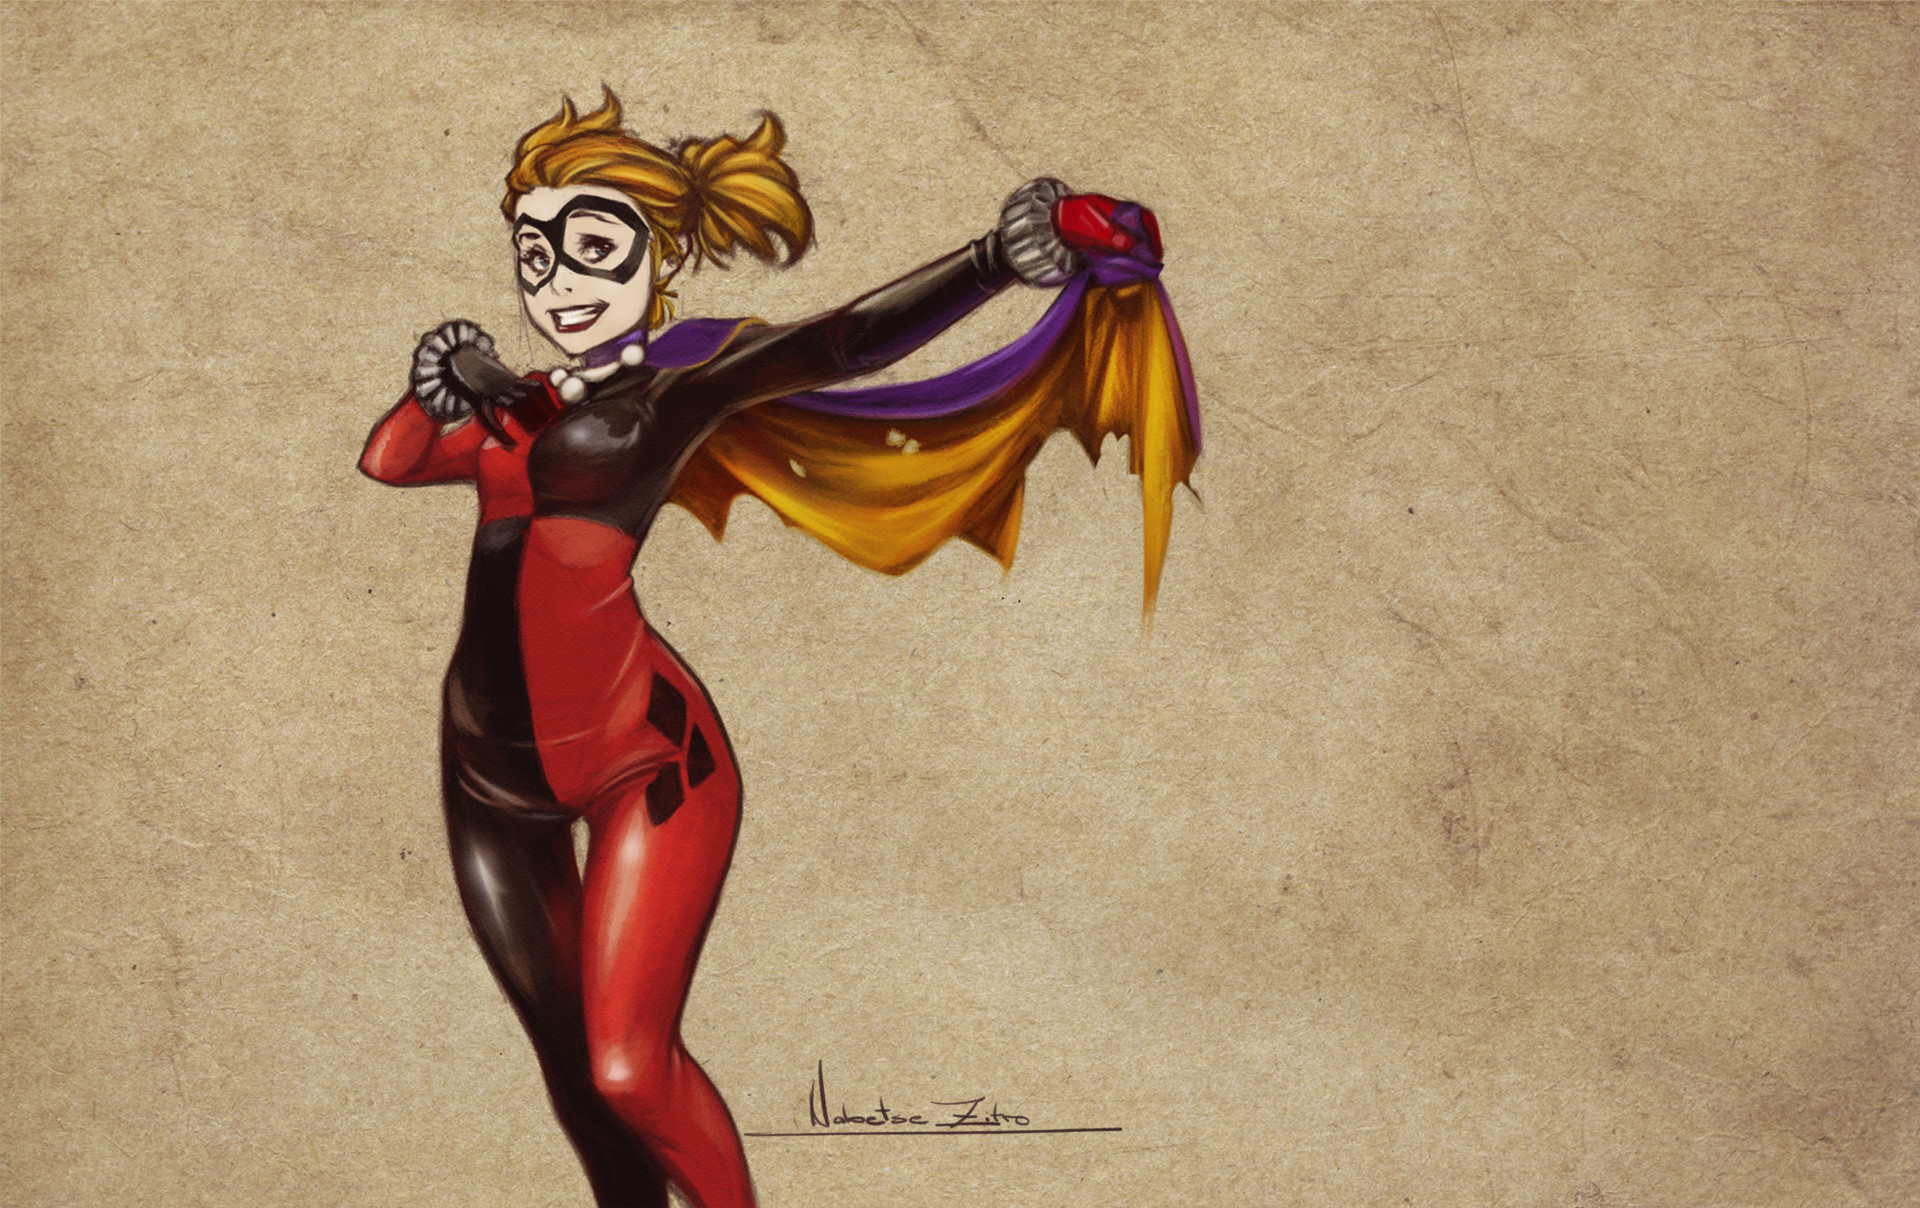 General 1920x1208 Nabetse Zitro Harley Quinn DC Comics superheroines mask simple background artwork comics comic art